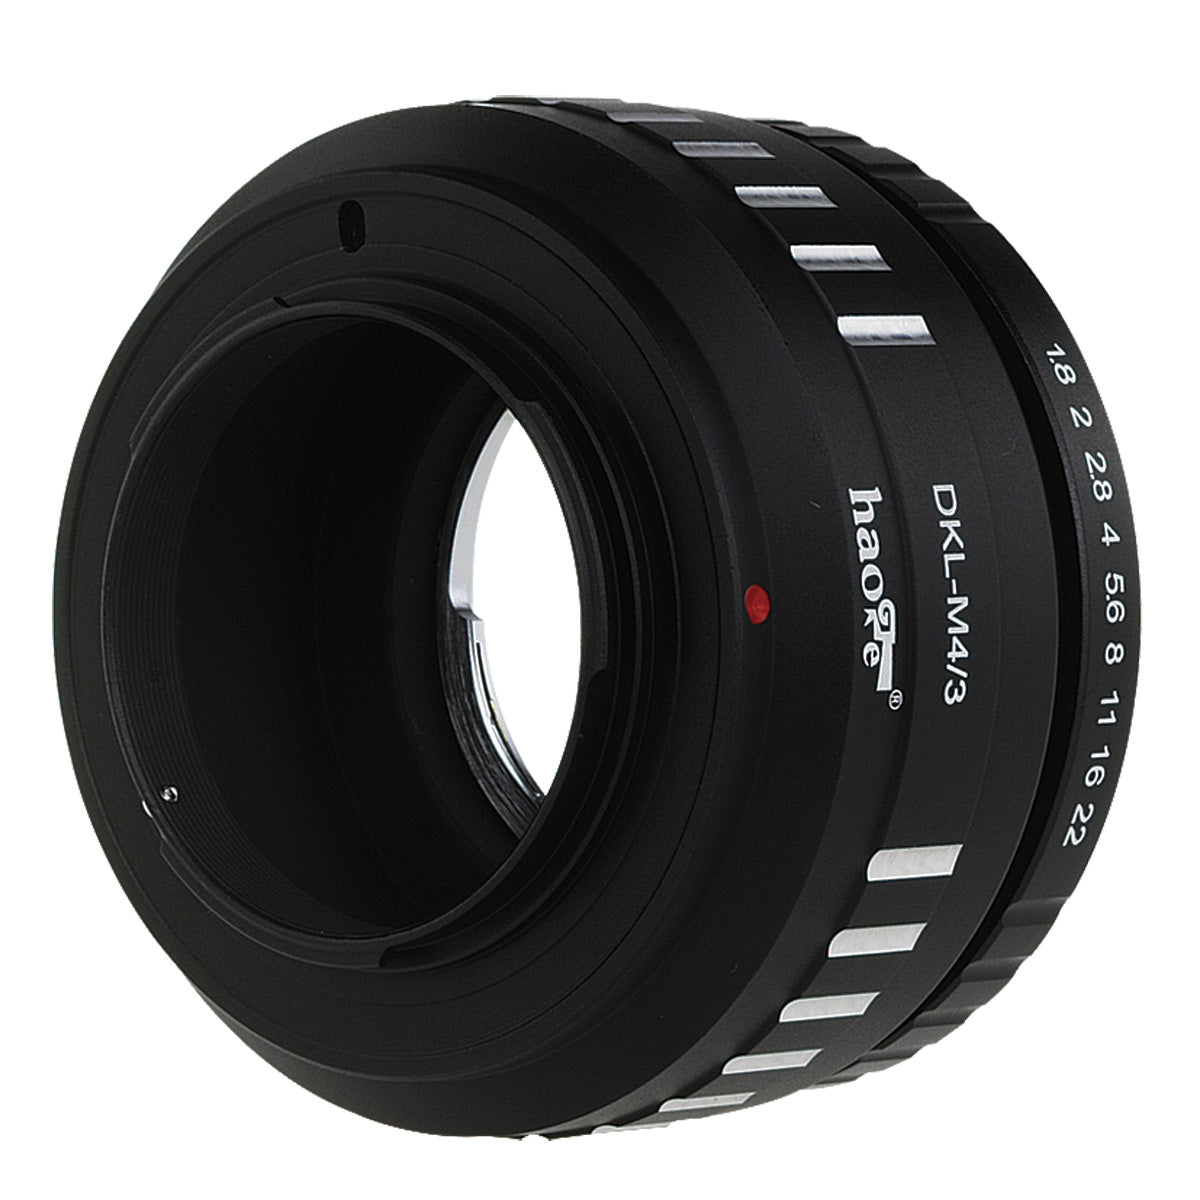 Haoge Lens Mount Adapter for Voigtlander Retina DKL mount Lens to Micro Four Thirds System M4/3 Camera